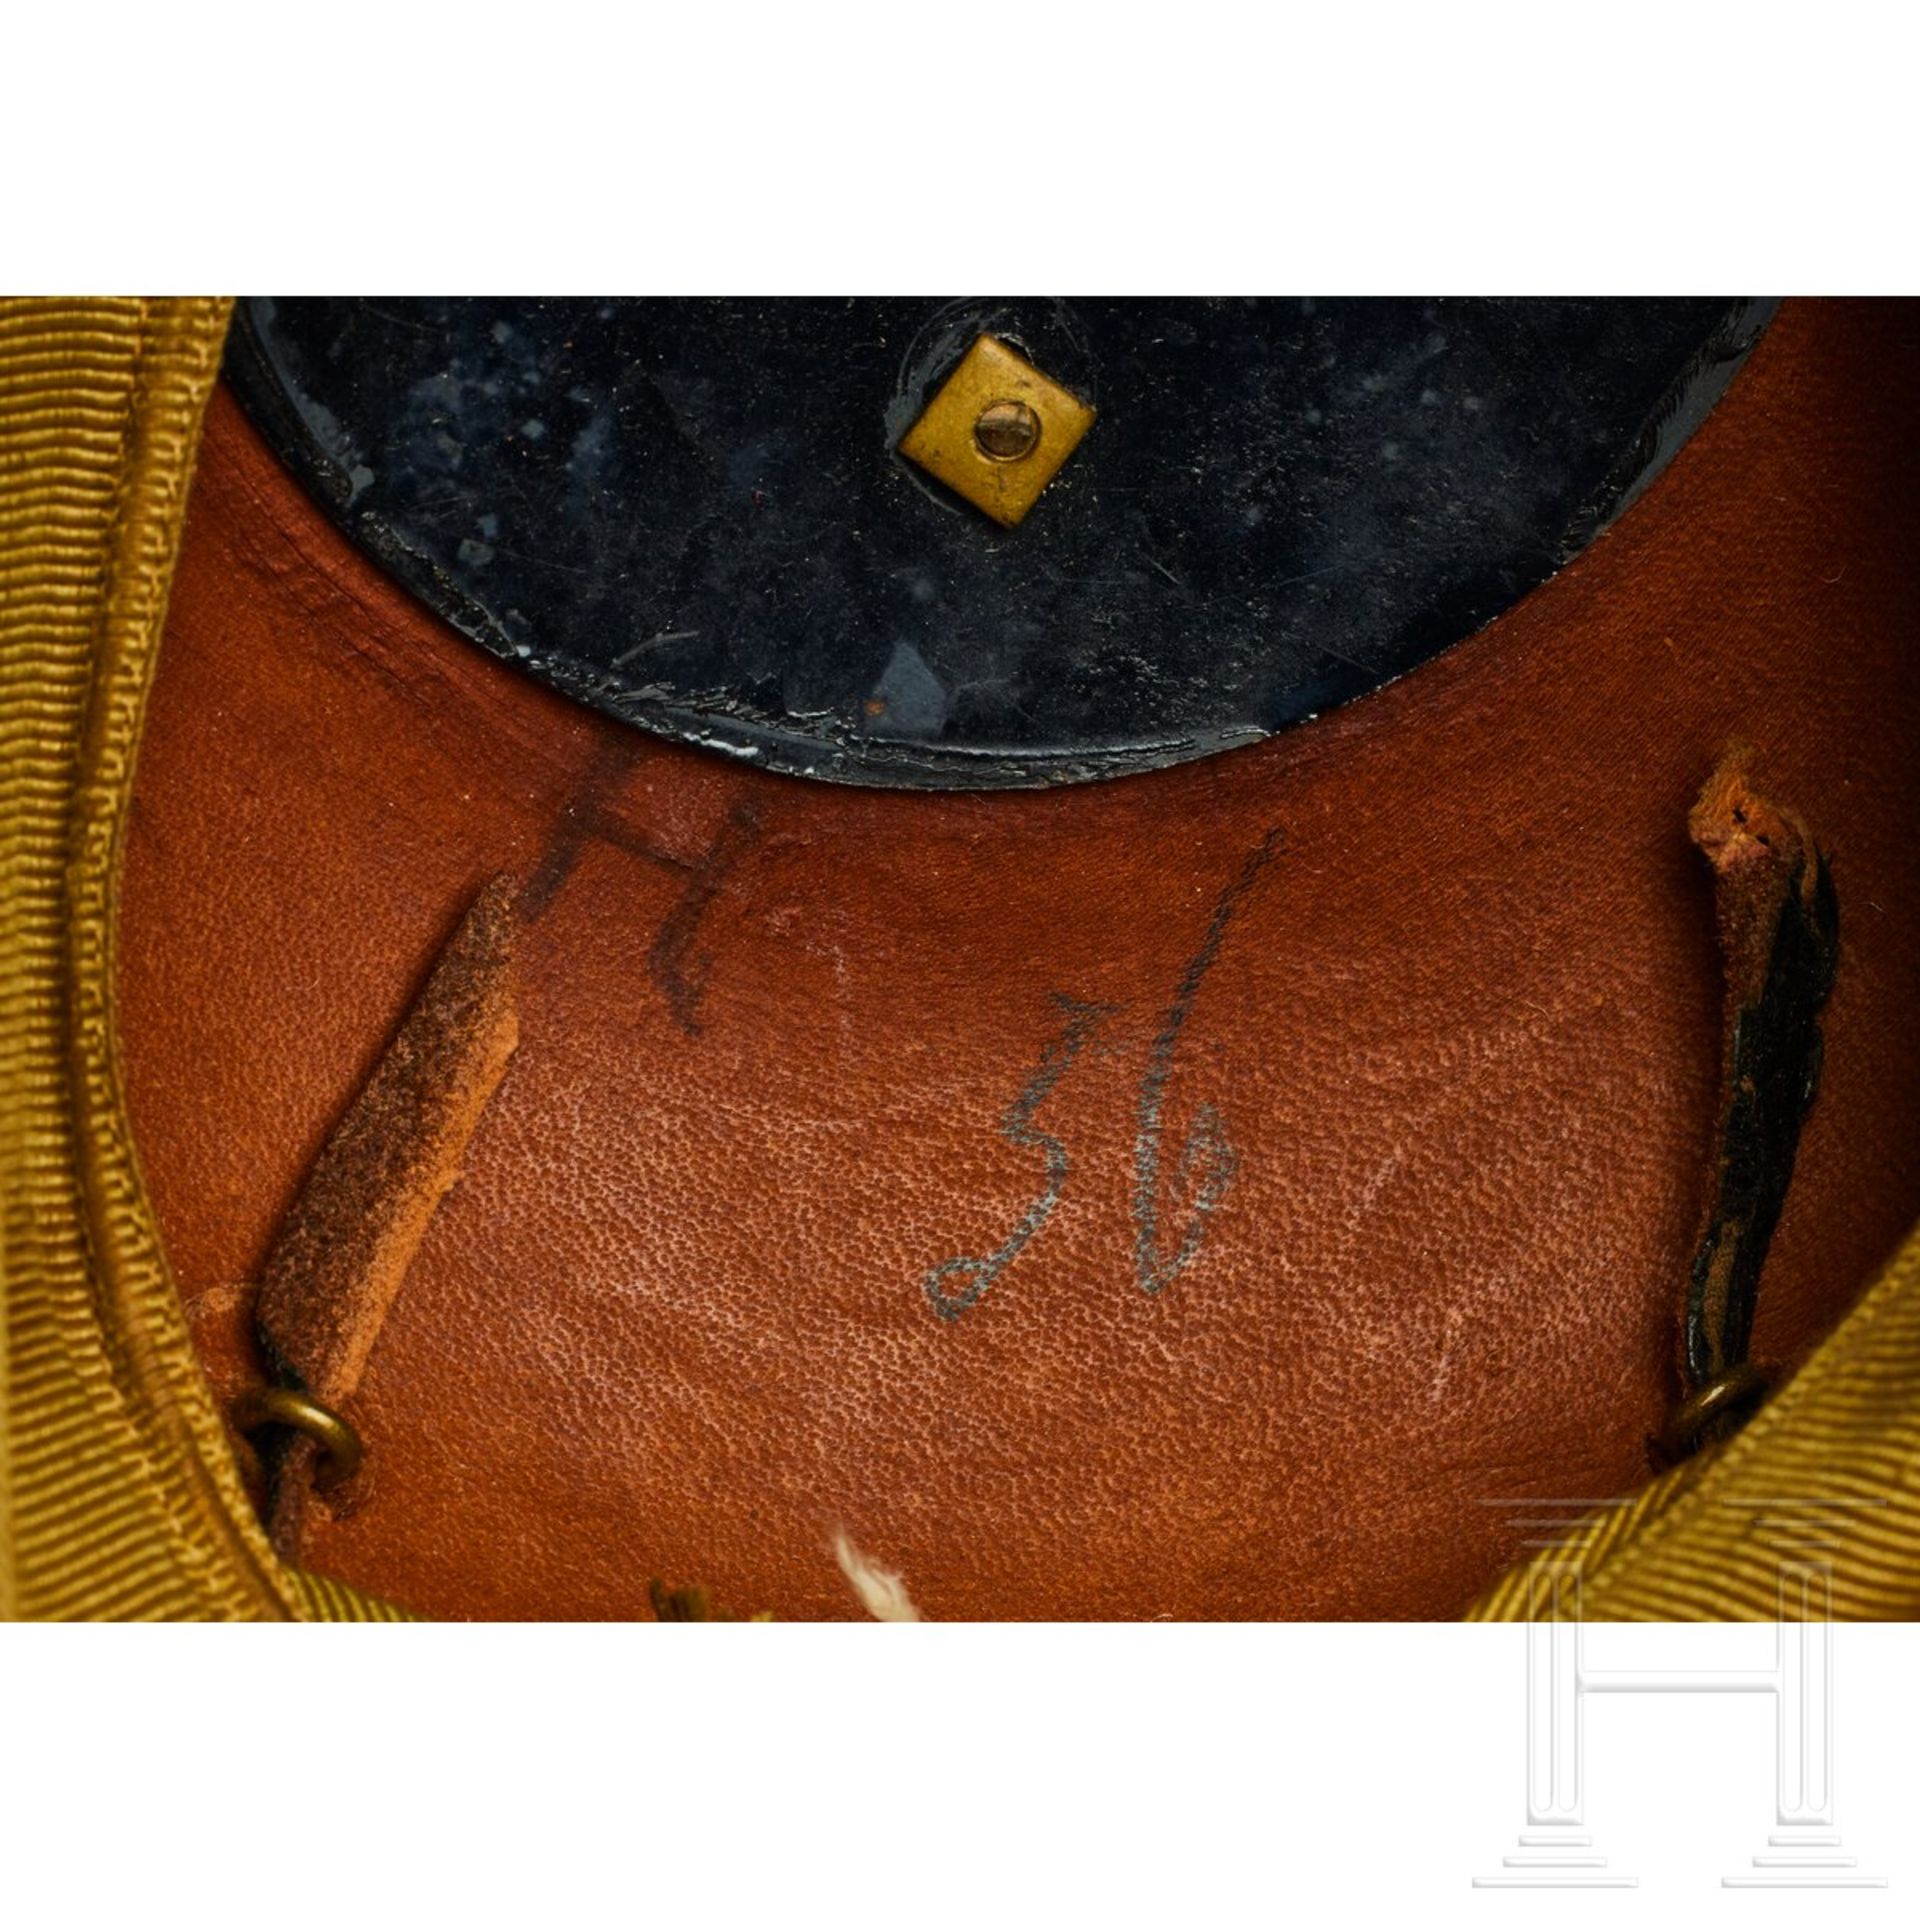 A helmet for Grenadier Regiment 89 Mecklenburg NCO Beamte - Image 9 of 9